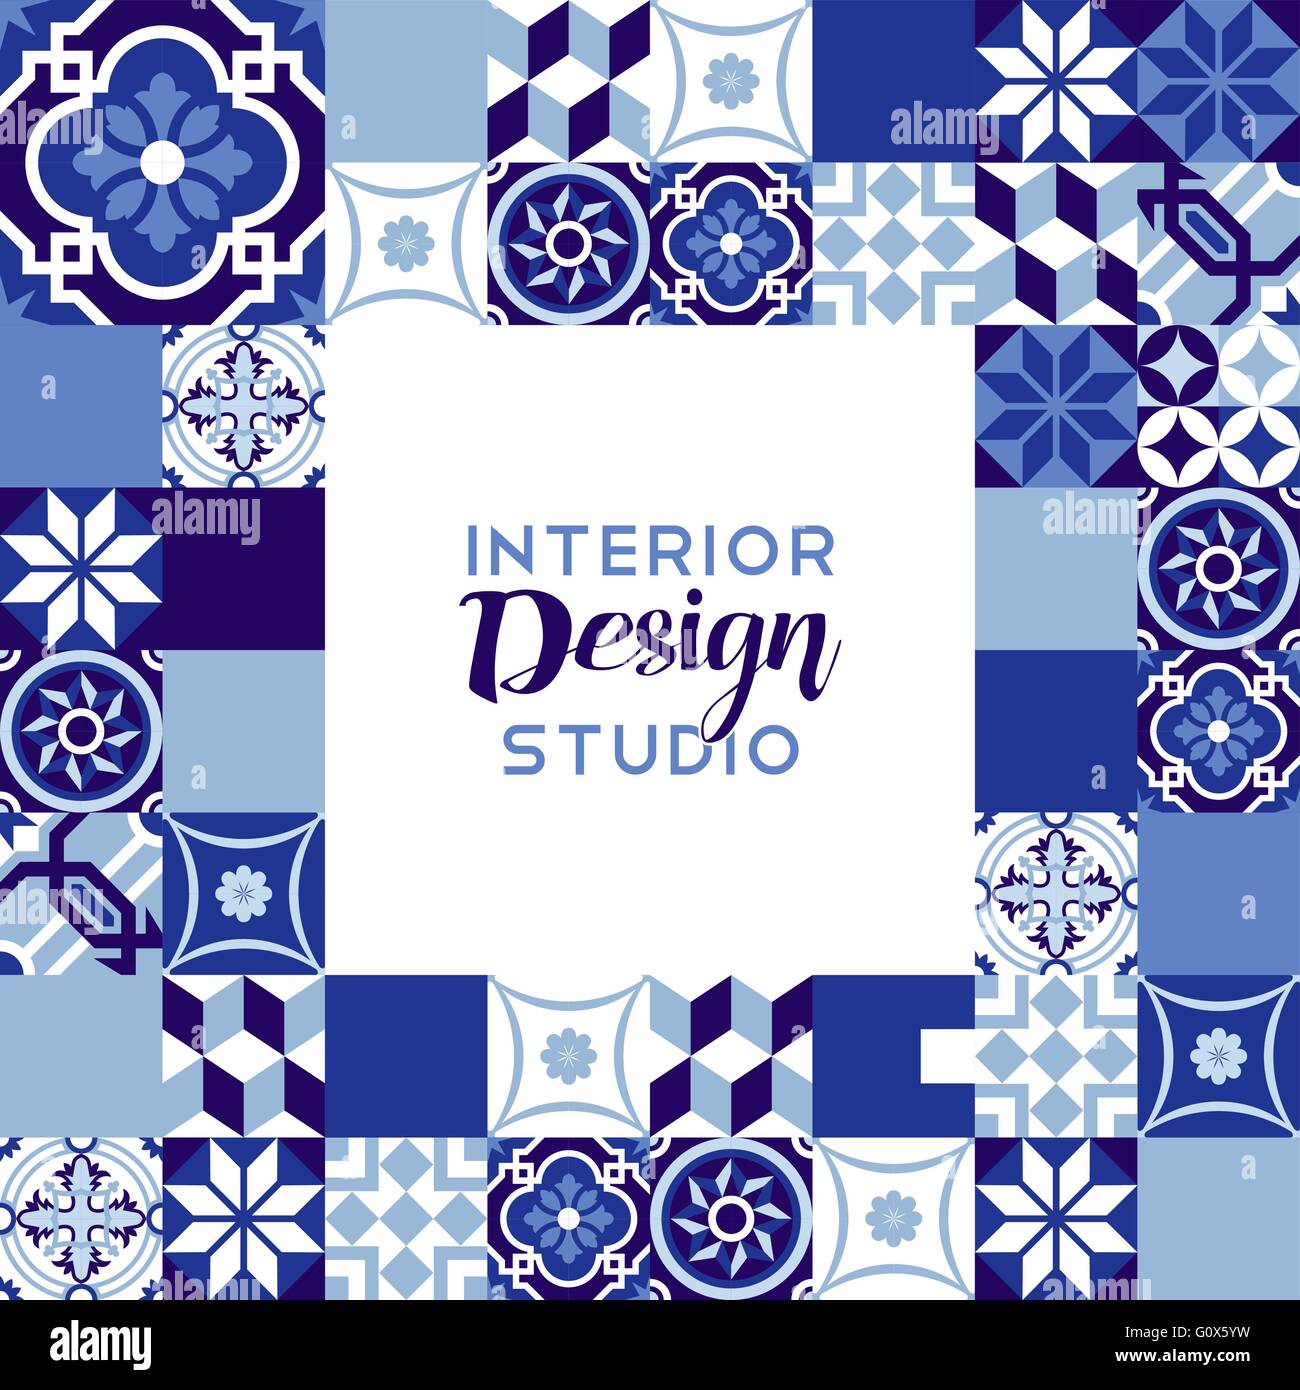 Interior design studio illustration with classic vintage ceramic mosaic tile decoration in indigo blue color. EPS10 vector. Stock Vector